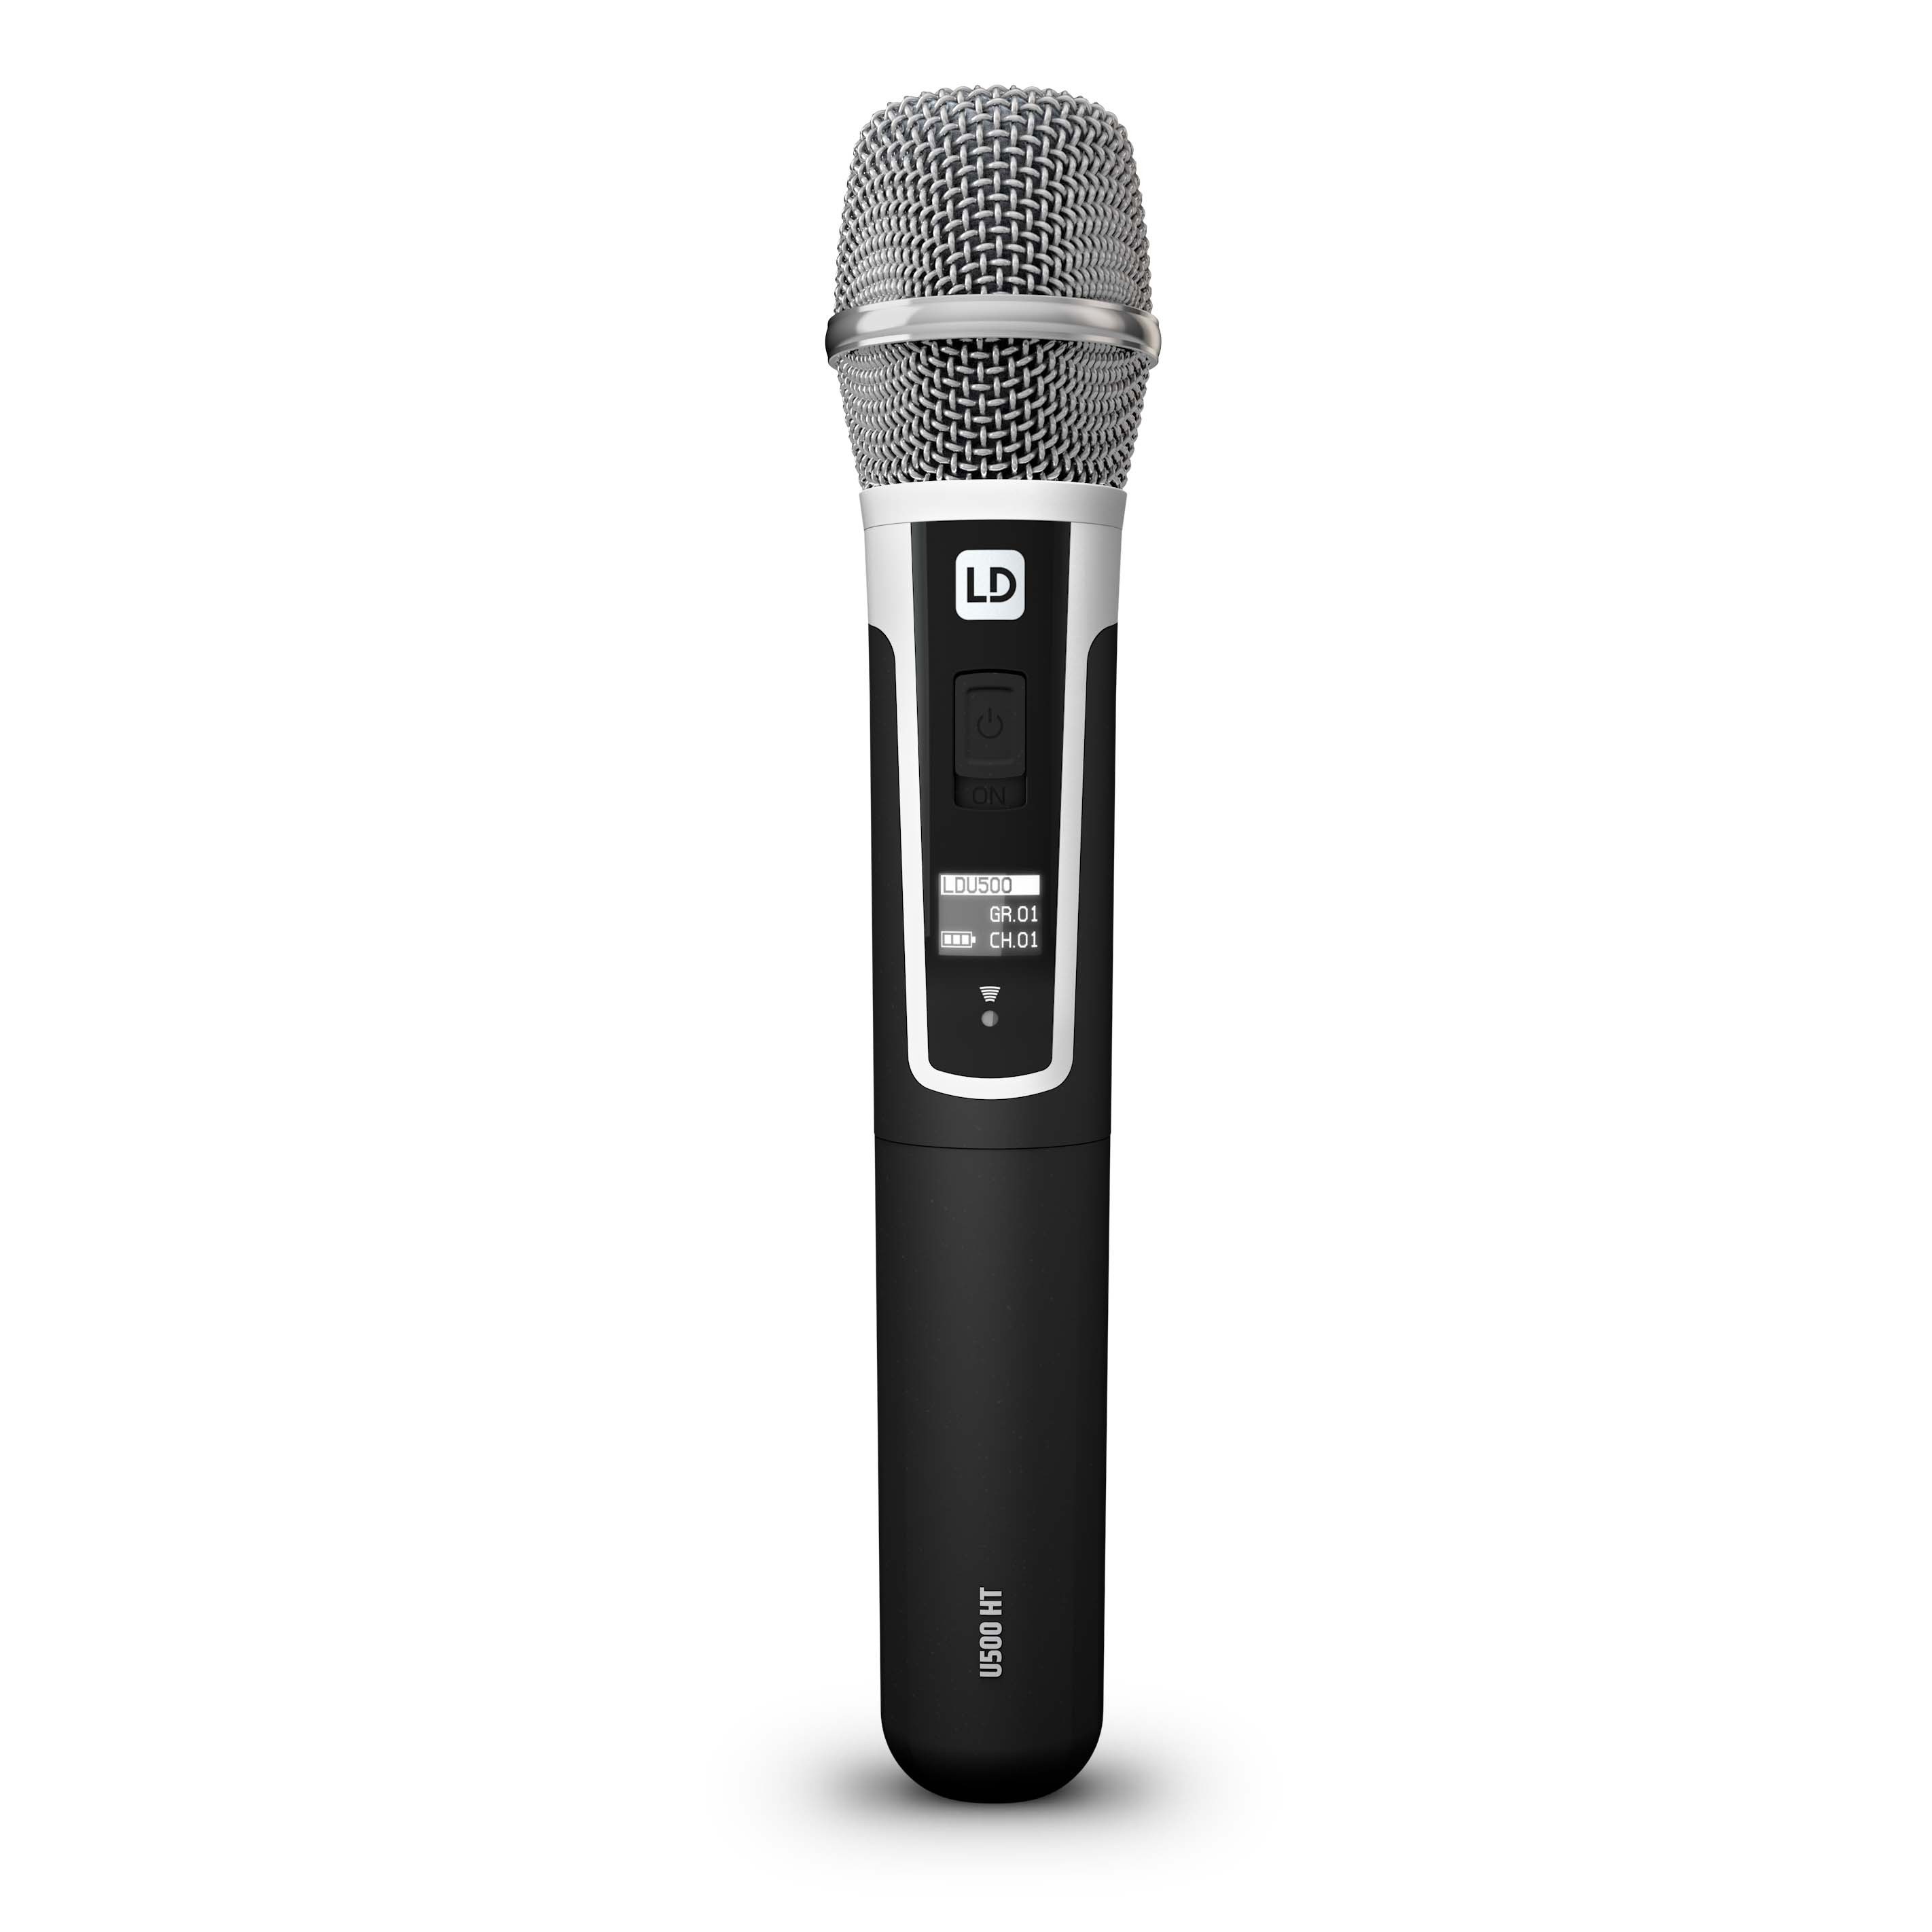 Ld Systems U508 Hhc - Wireless handheld microphone - Variation 5